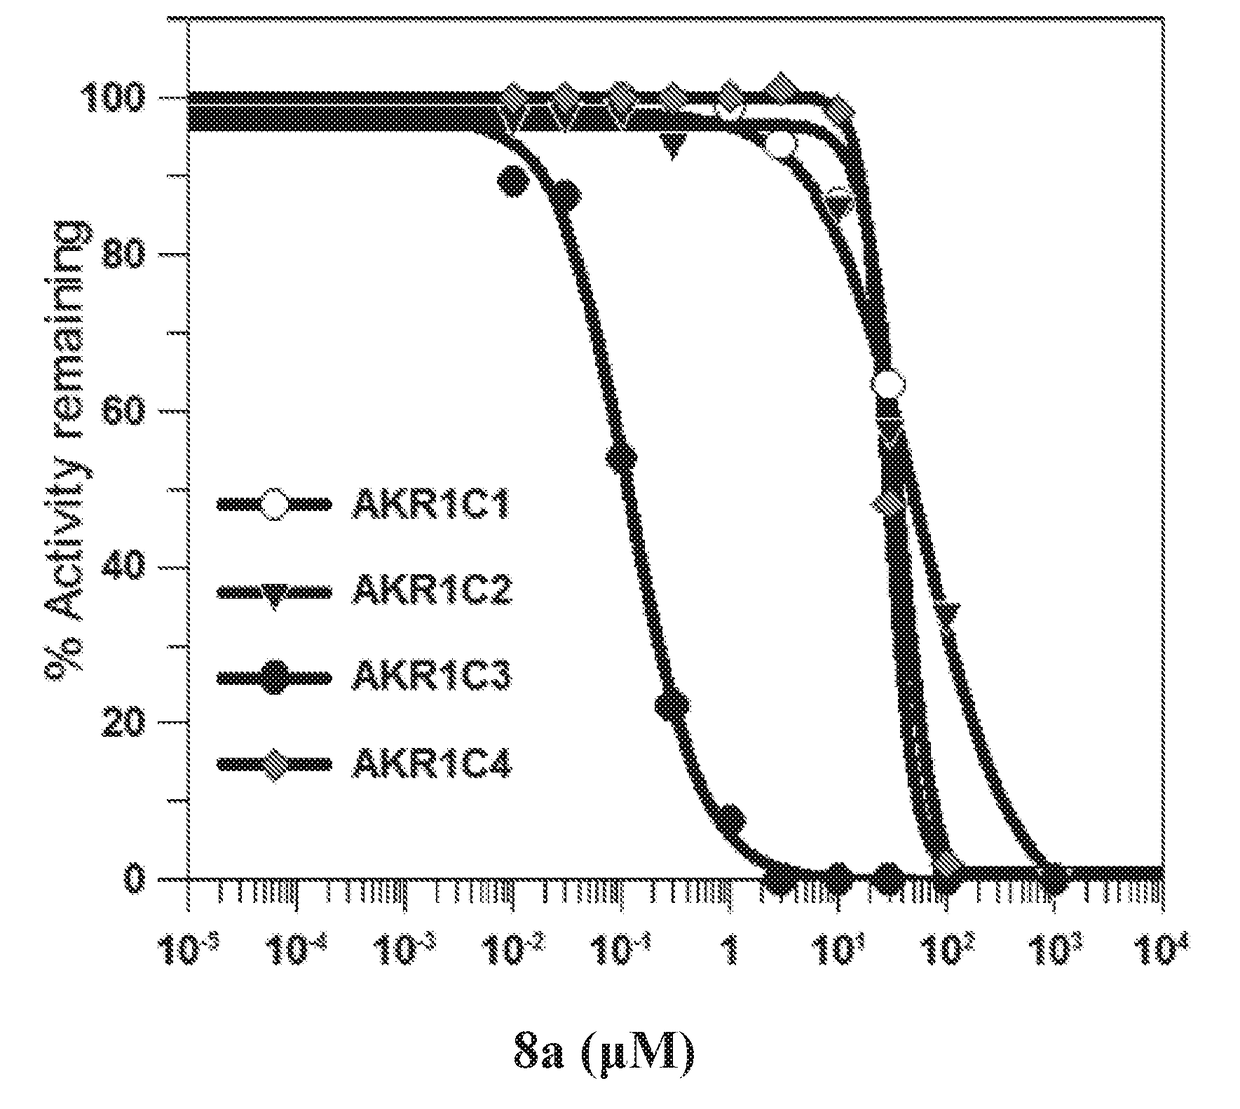 2-beta-naphthyl-acetic acid analogs as akr1c3 inhibitors and methods of using same